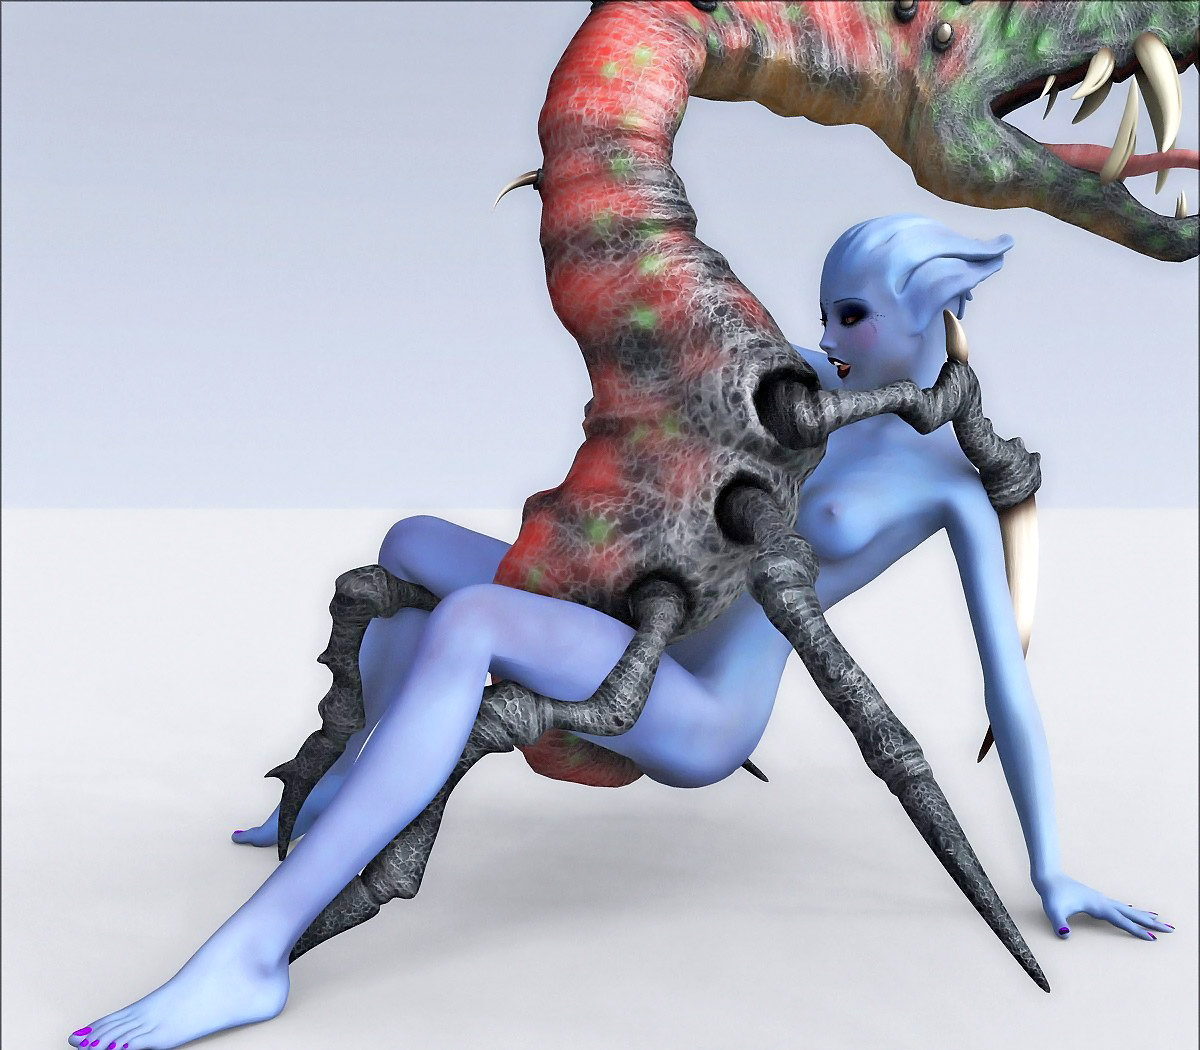 Brutal 3d gallery of an alien babe having sex with a slimy monster. |  KingdomOfEvil 3d